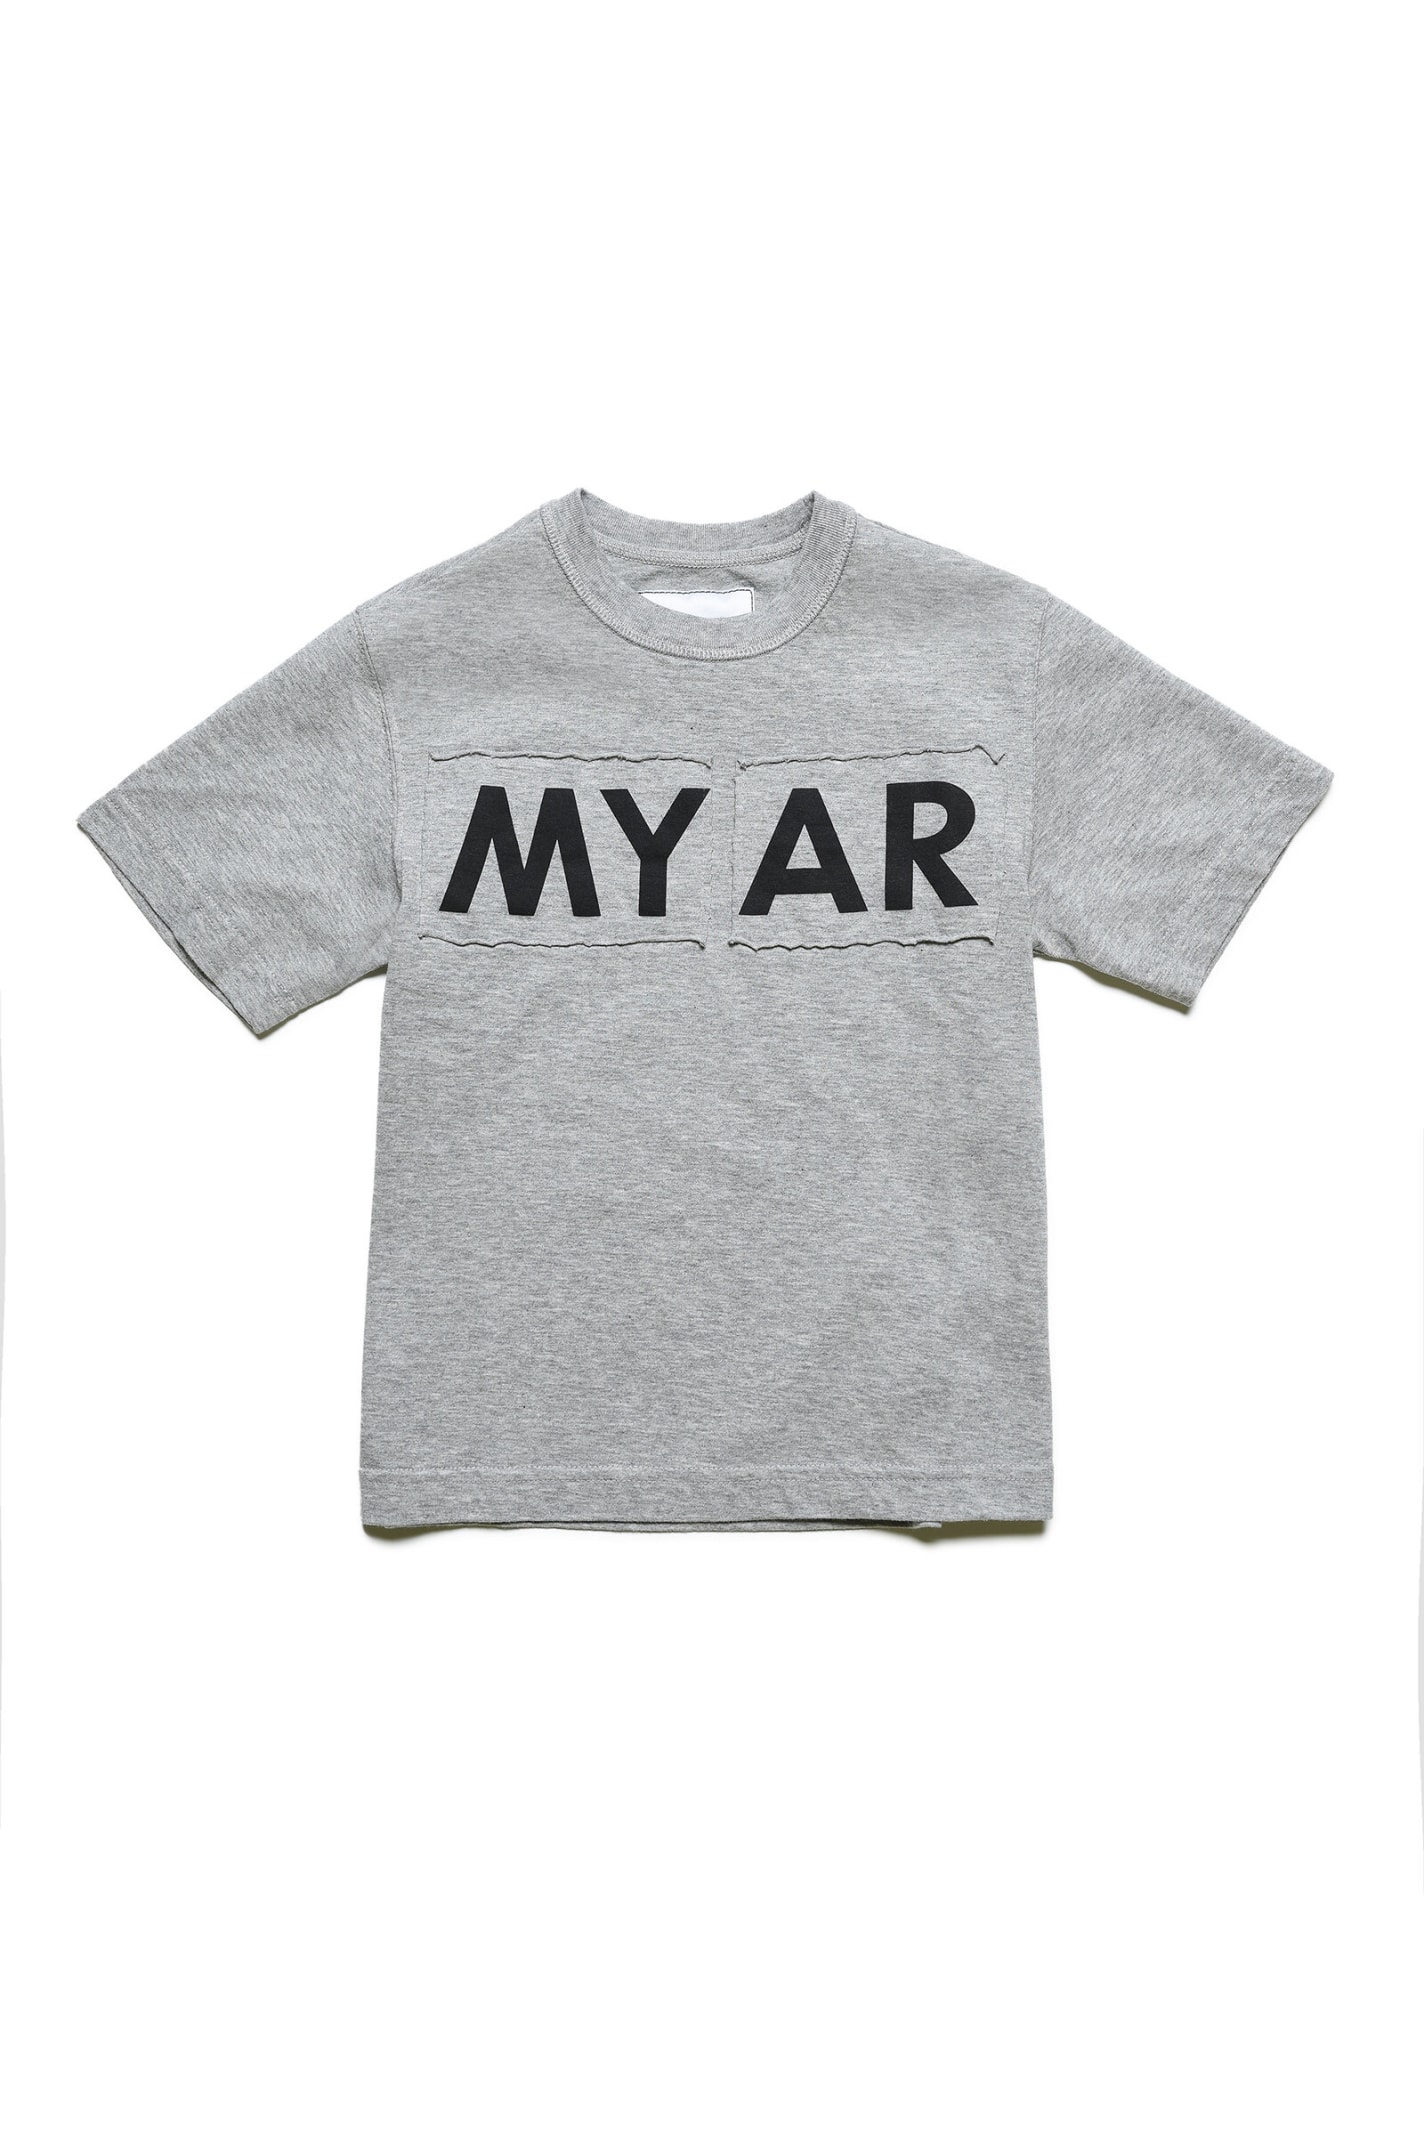 MYAR Myt6u T-shirt Myar